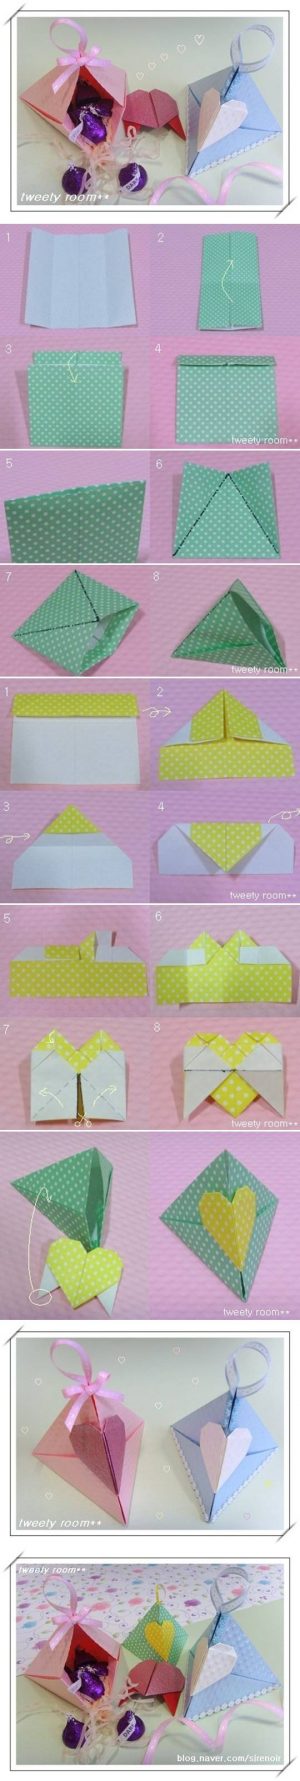 How To Make Small Origami Hearts Diy Origami Triangle Heart Lock Gift Box